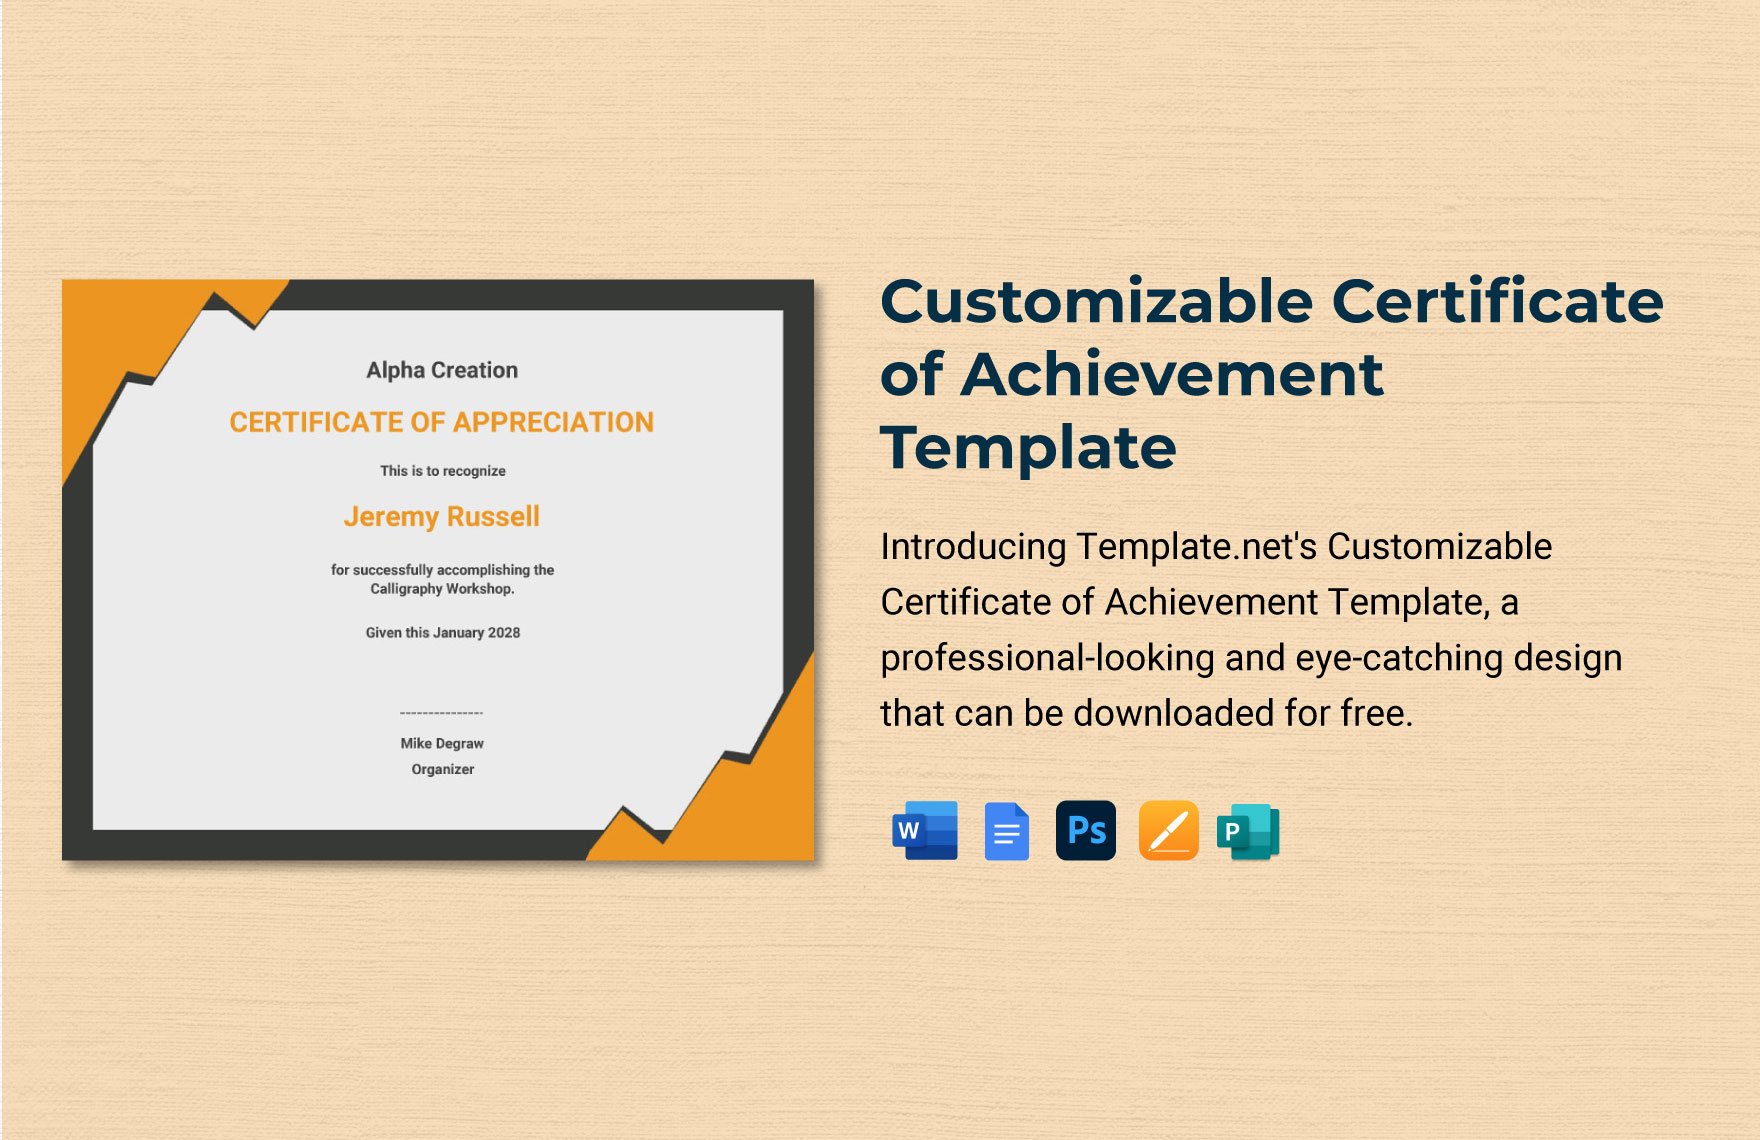 Customizable Certificate of Achievement Template